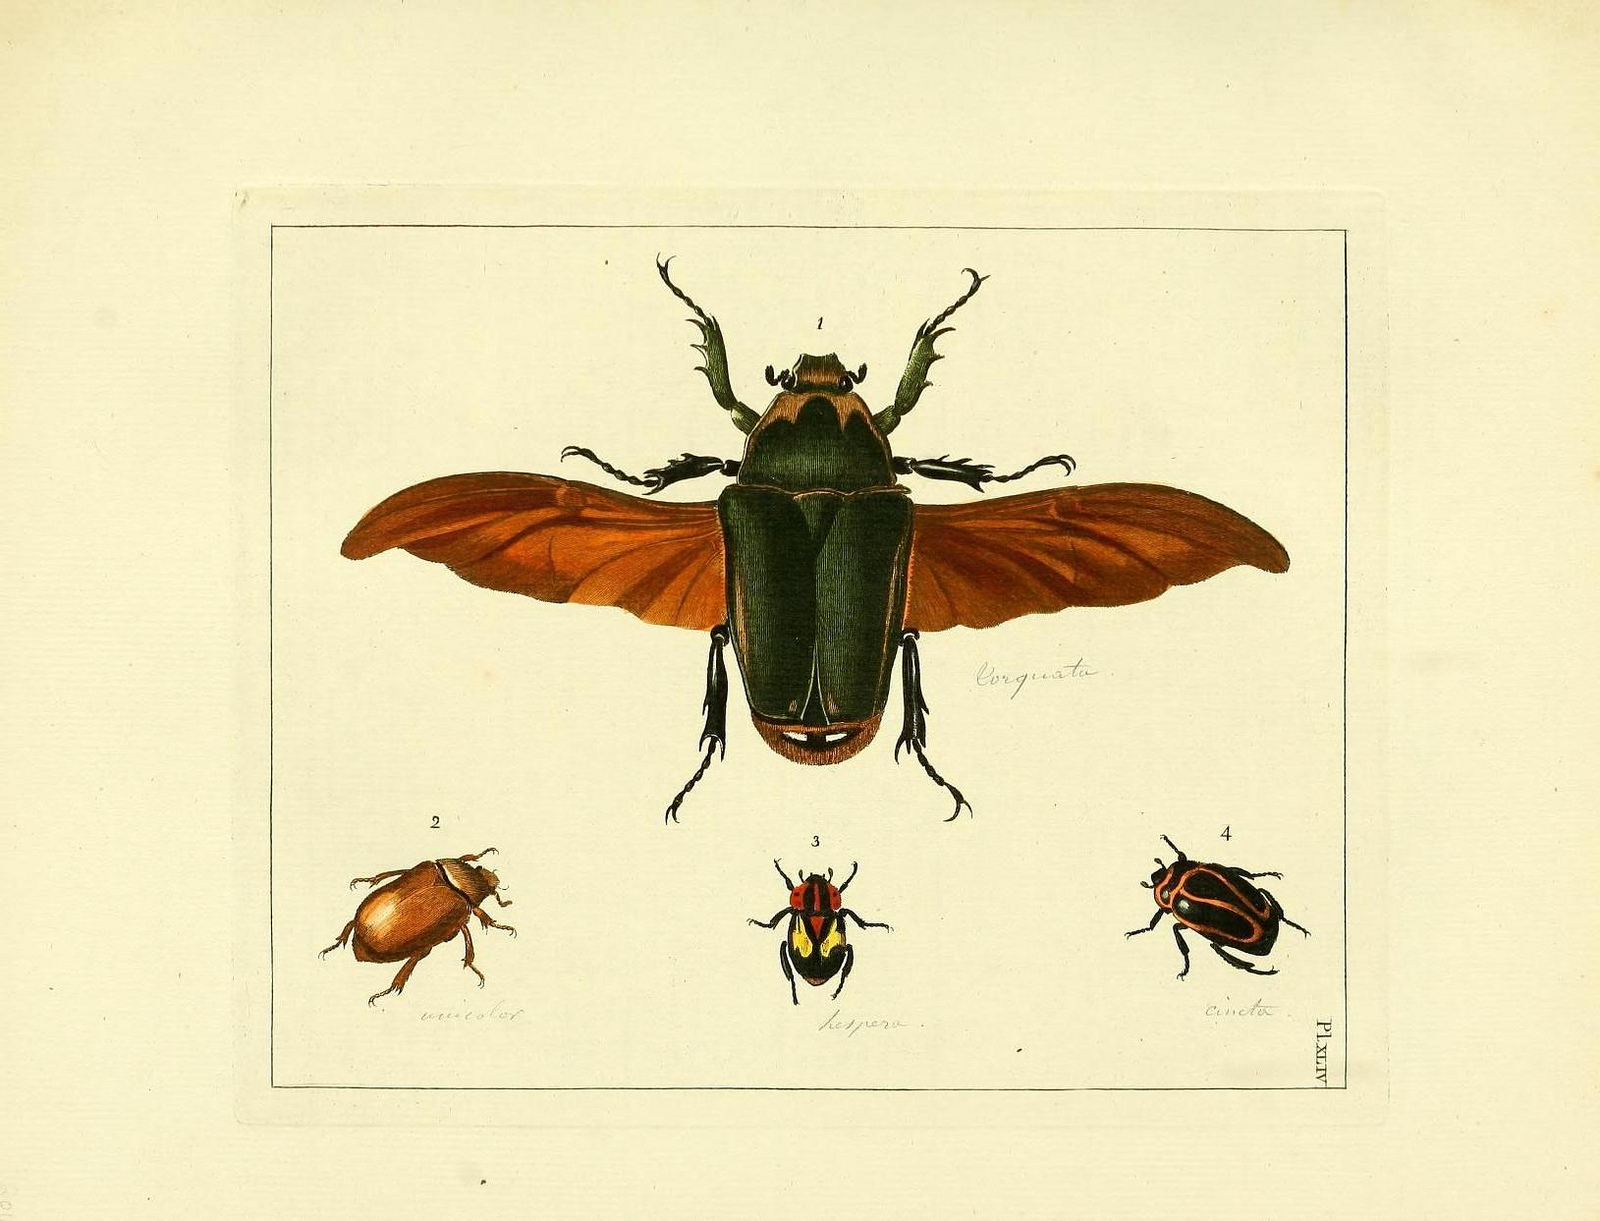 illustration of a large winged beetle